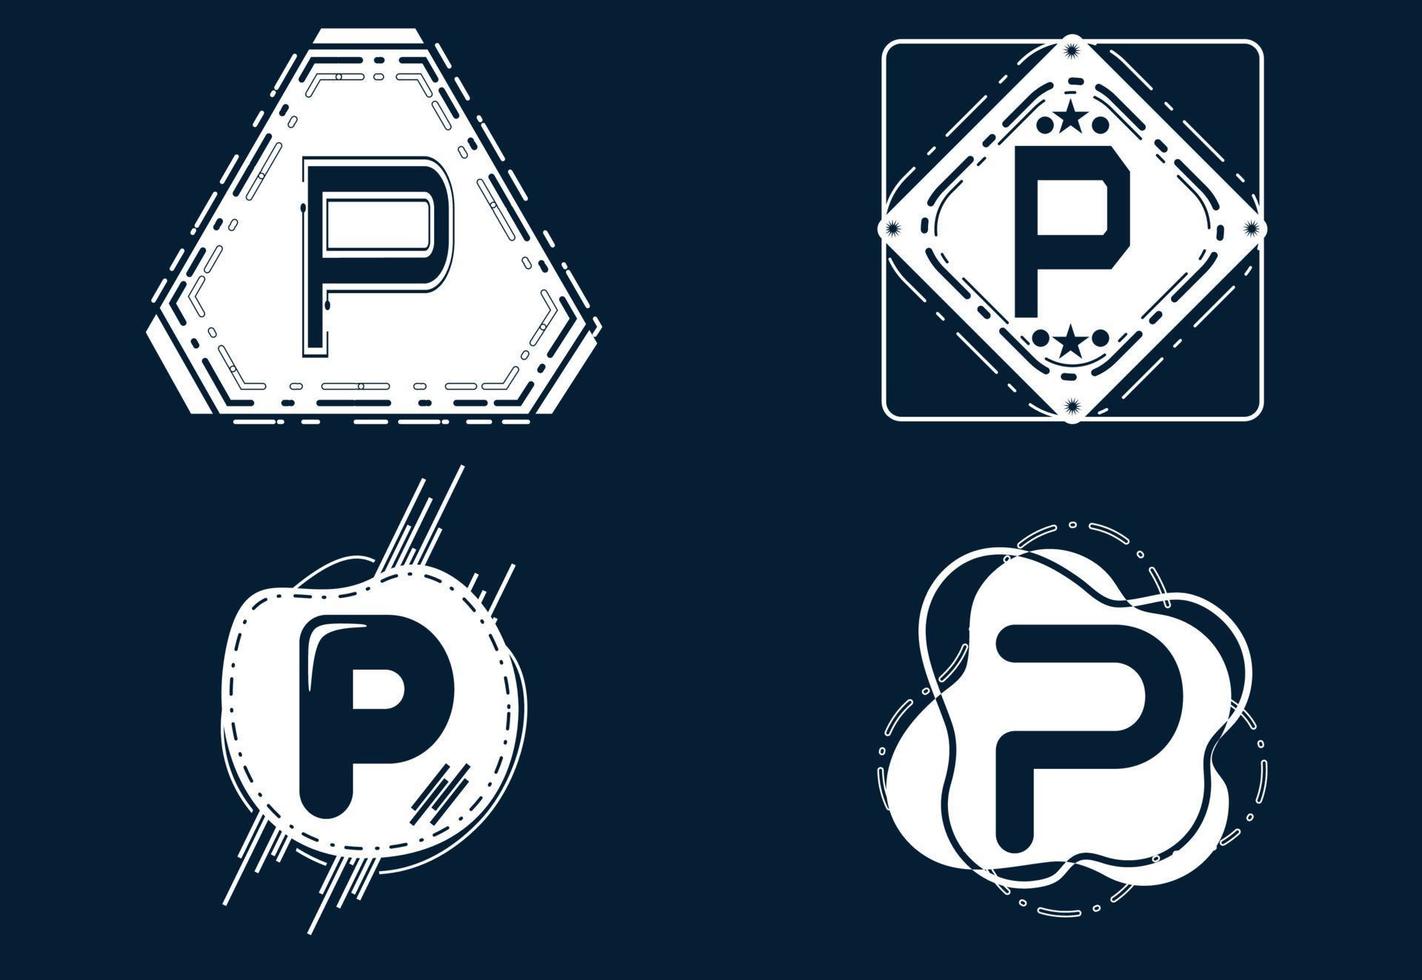 Creative P letter logo and icon design template vector